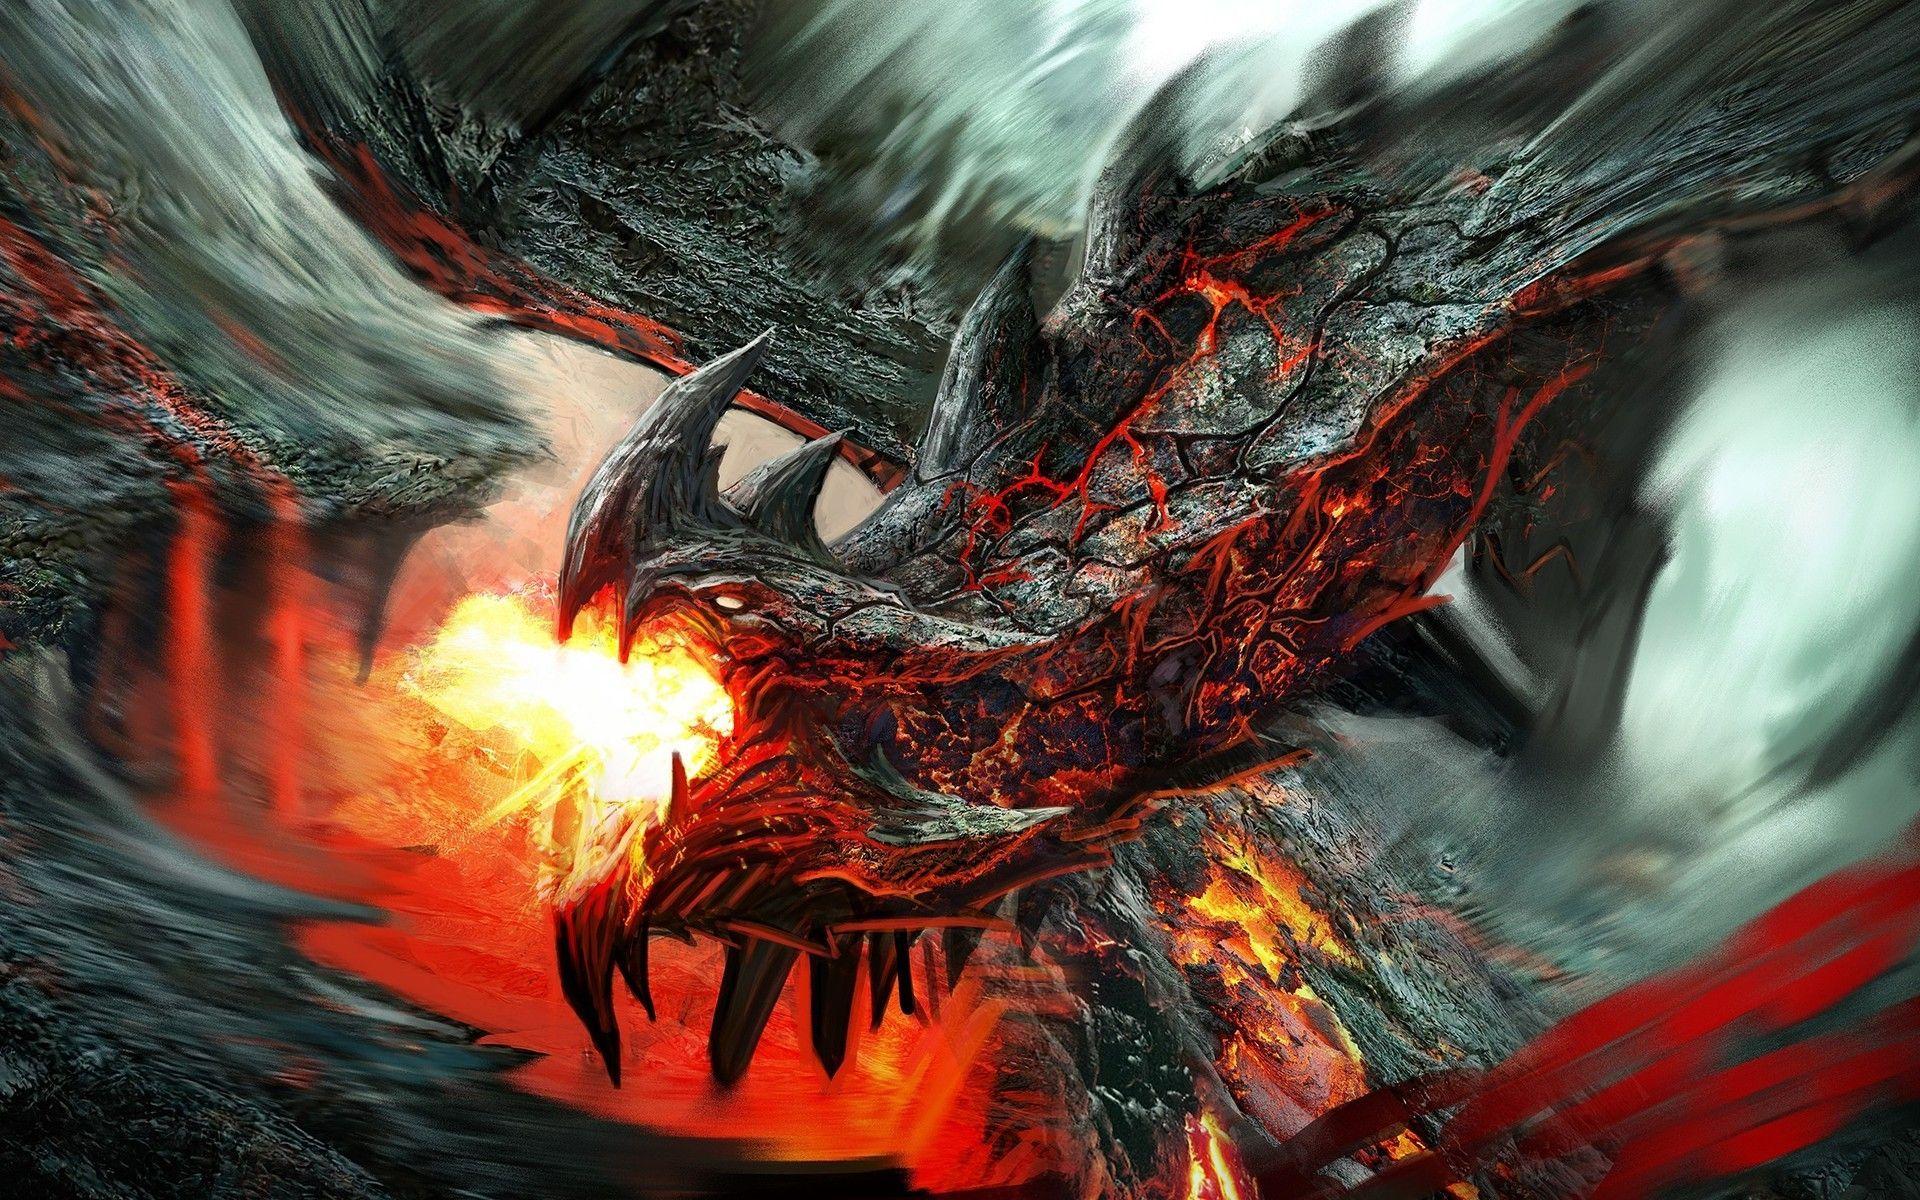 Fire breathing lava dragon Wallpaper. Dragon picture, Fantasy dragon, Cool dragons